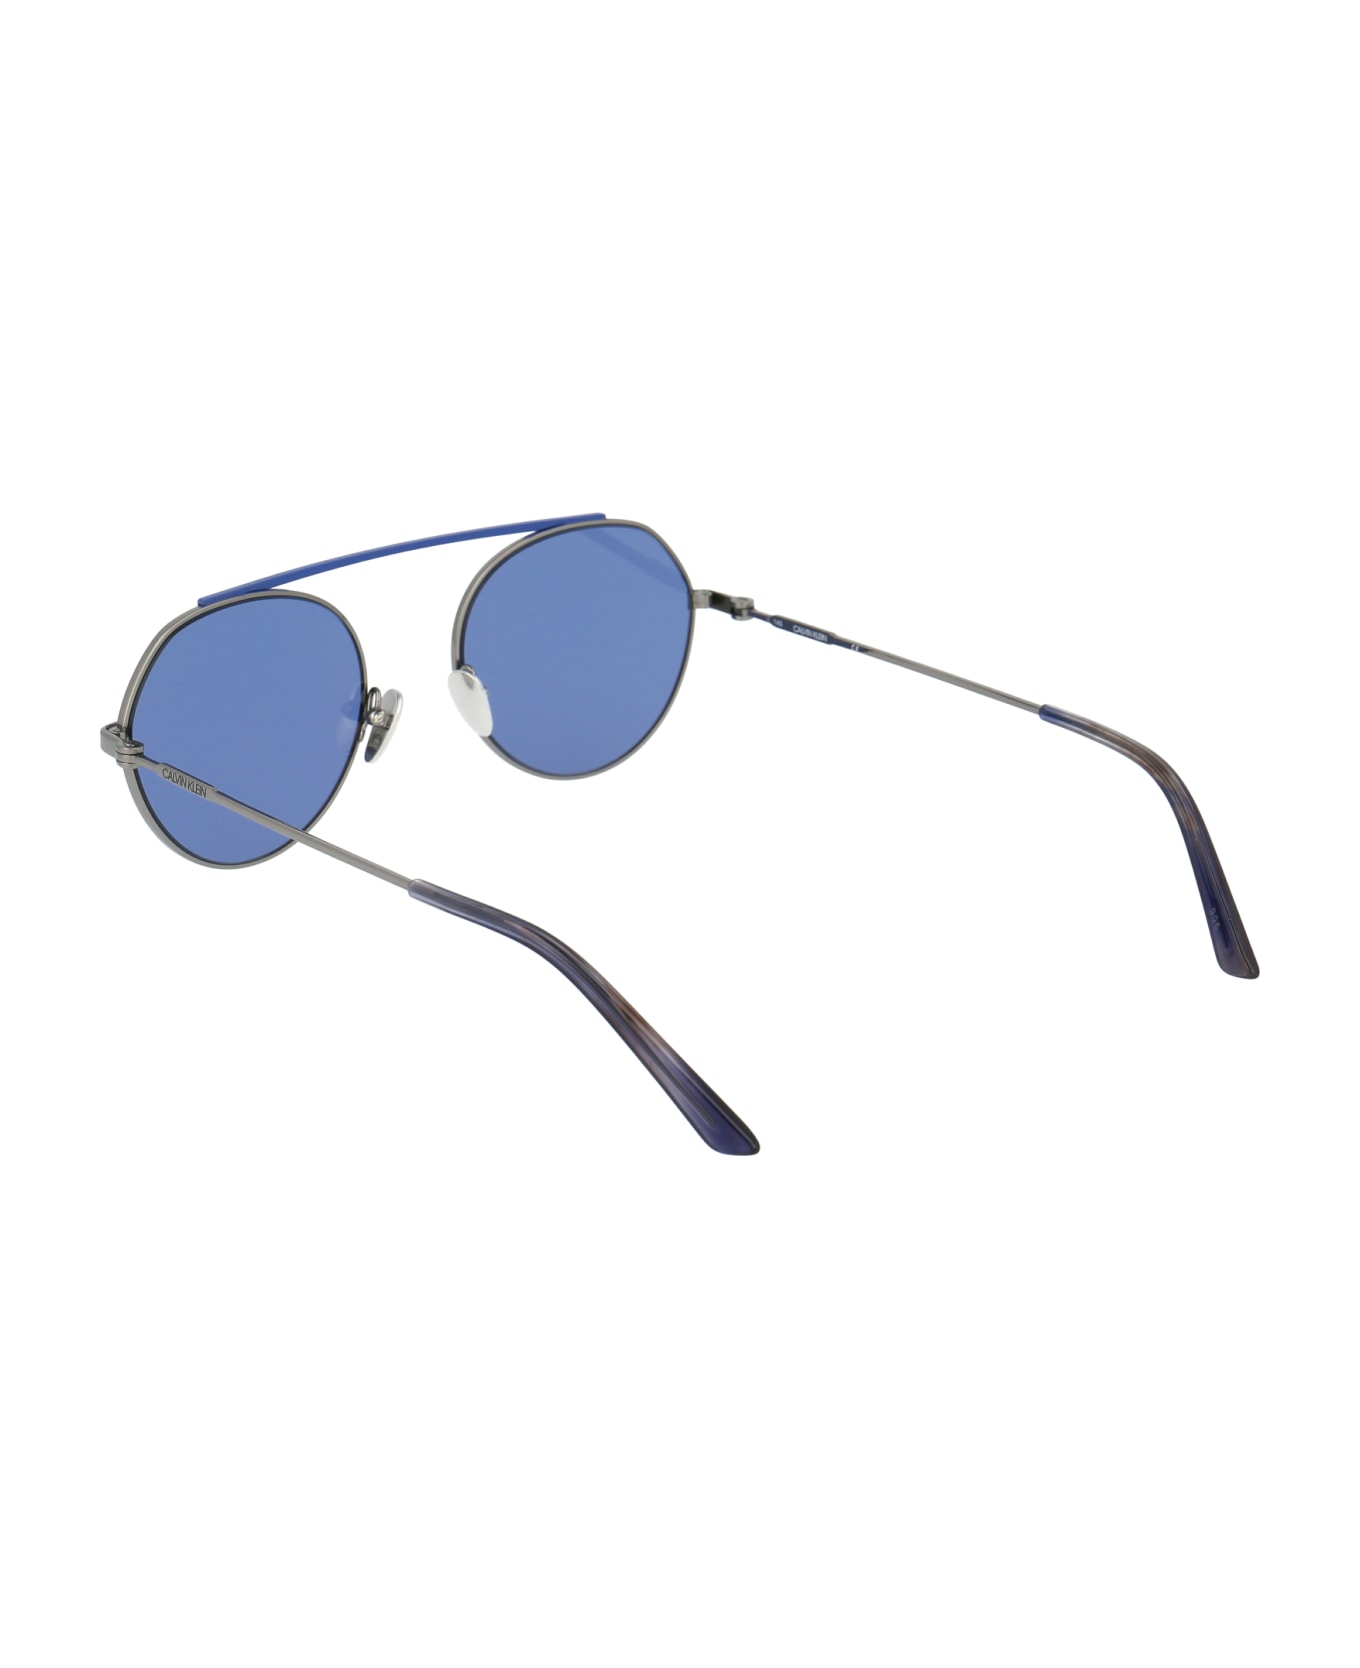 Calvin Klein Ck19149s Sunglasses - 009 BLUE